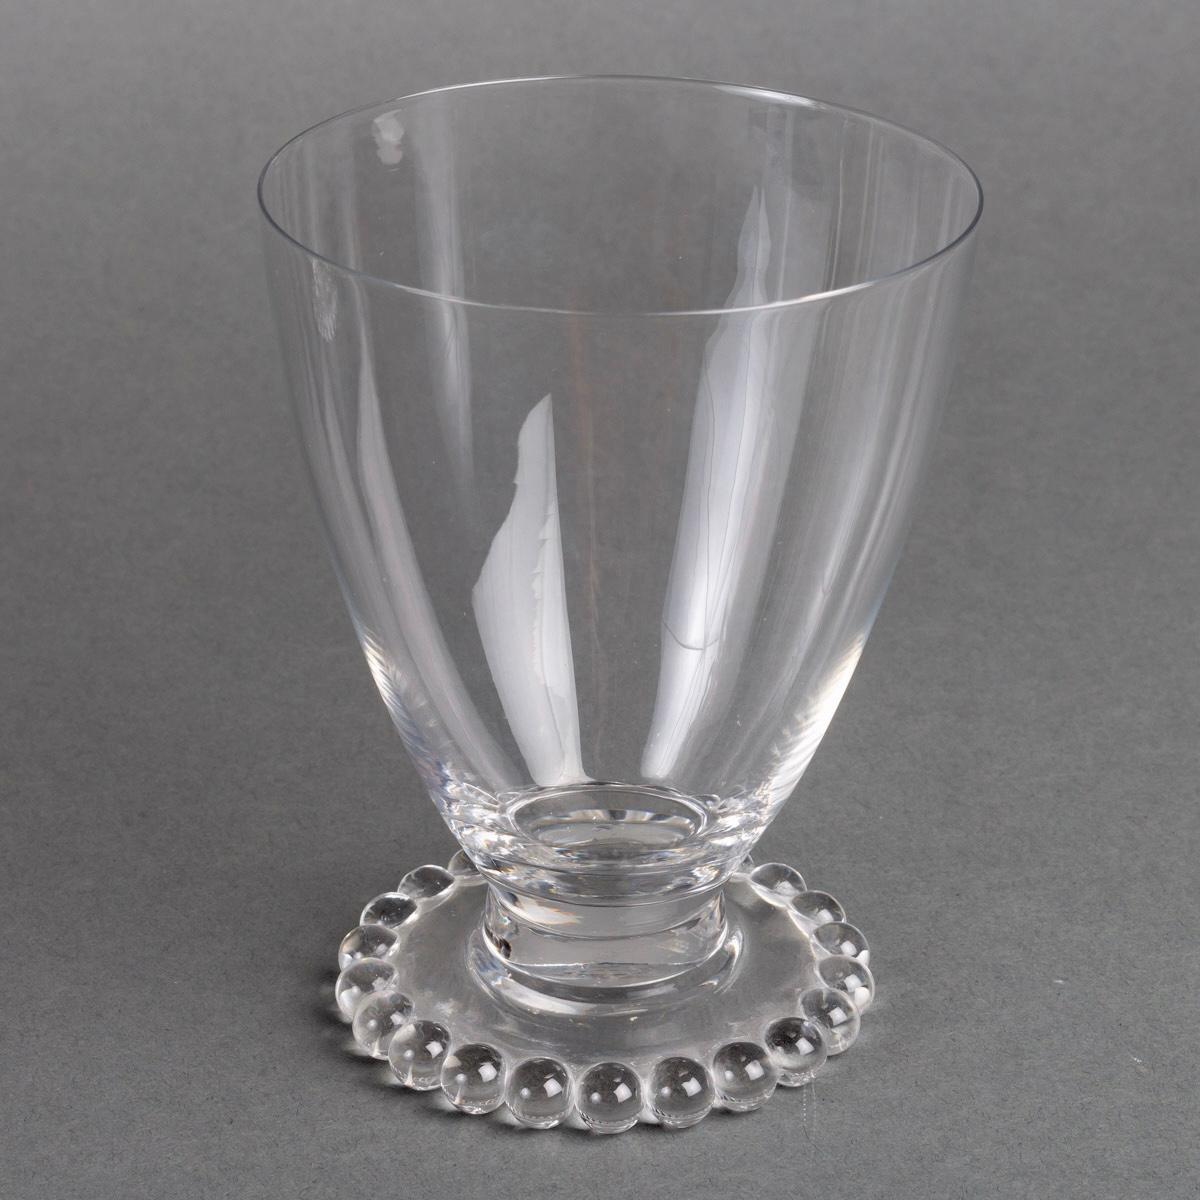 1935 René Lalique, Tablewares Glasses Decanters Boules Glass, 34 Pieces In Good Condition For Sale In Boulogne Billancourt, FR